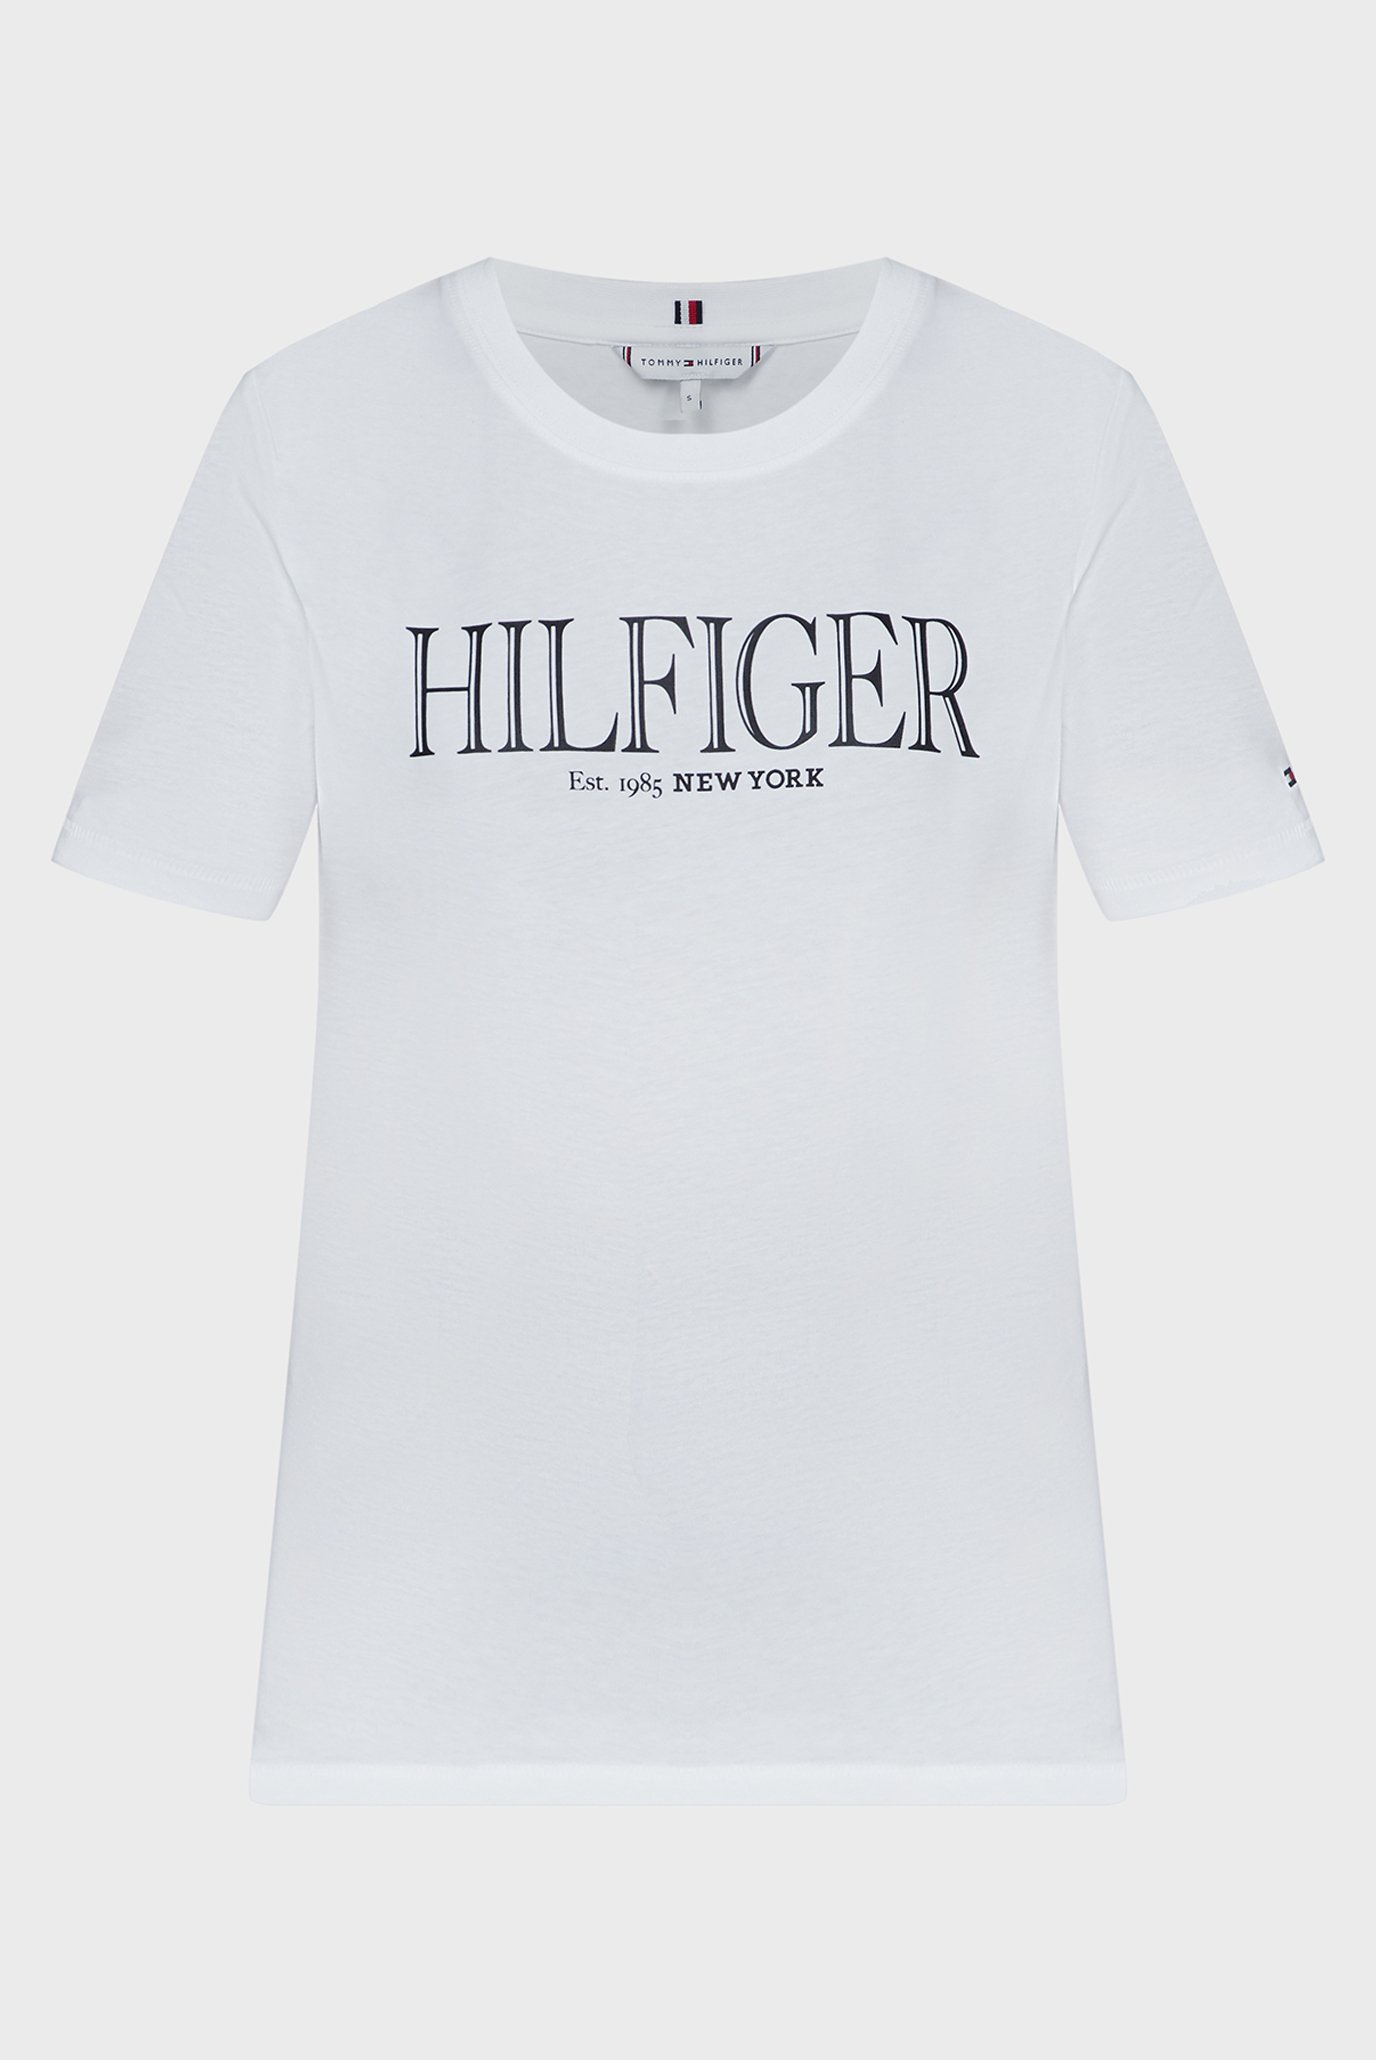 Женская белая футболка REG MDN HILFIGER C-NK SS 1